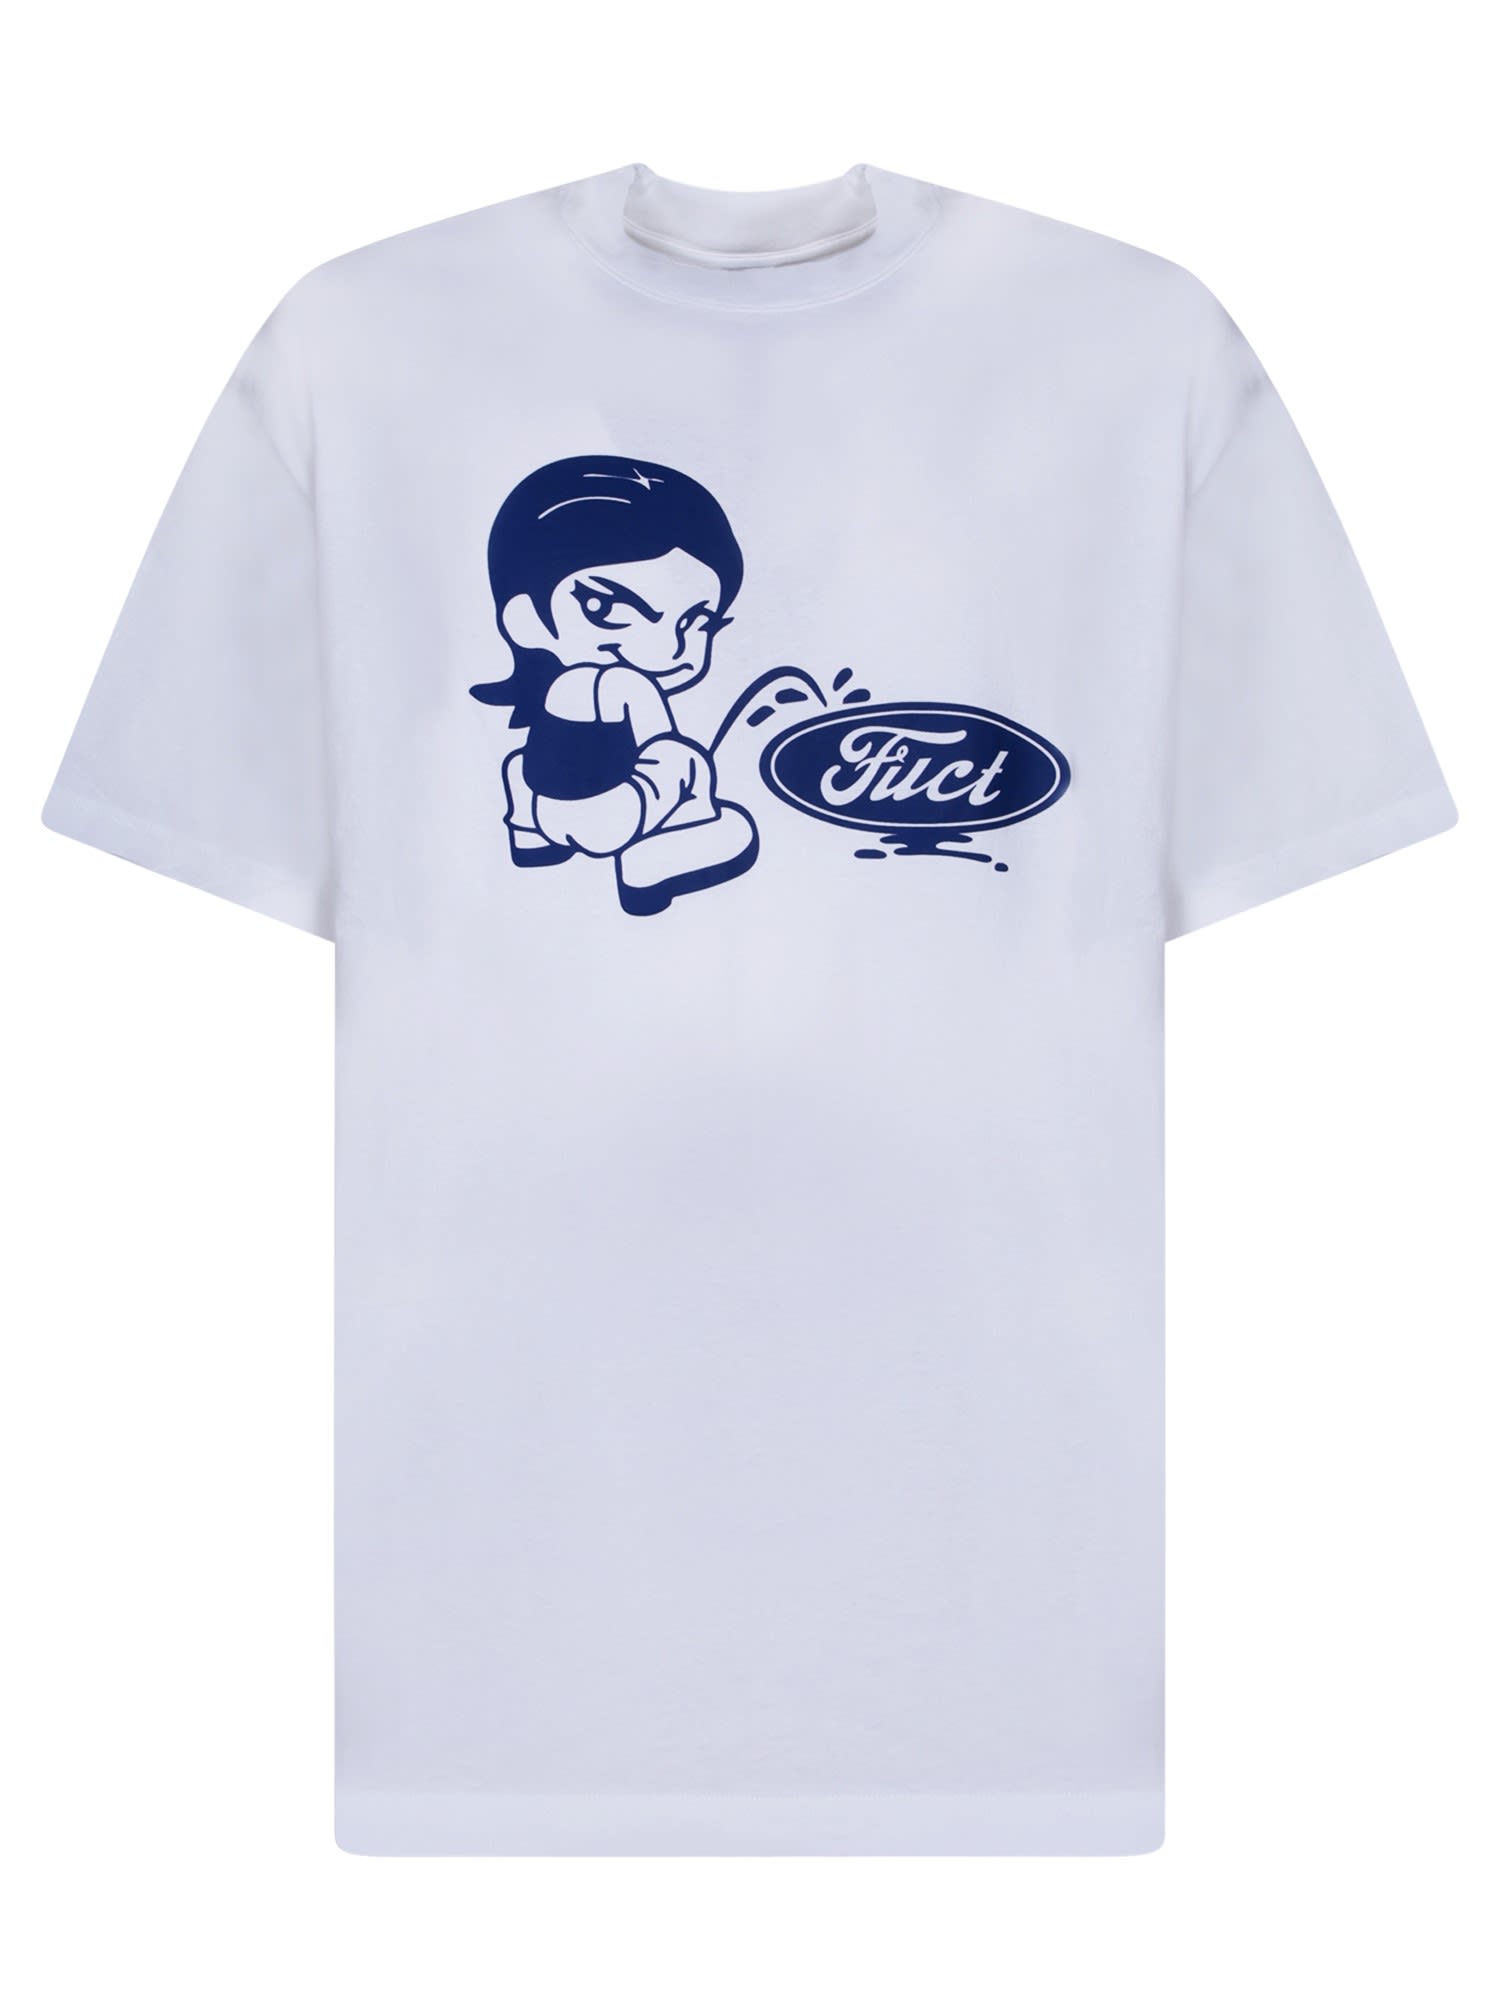 Shop Fuct Oval Pee Girl White T-shirt